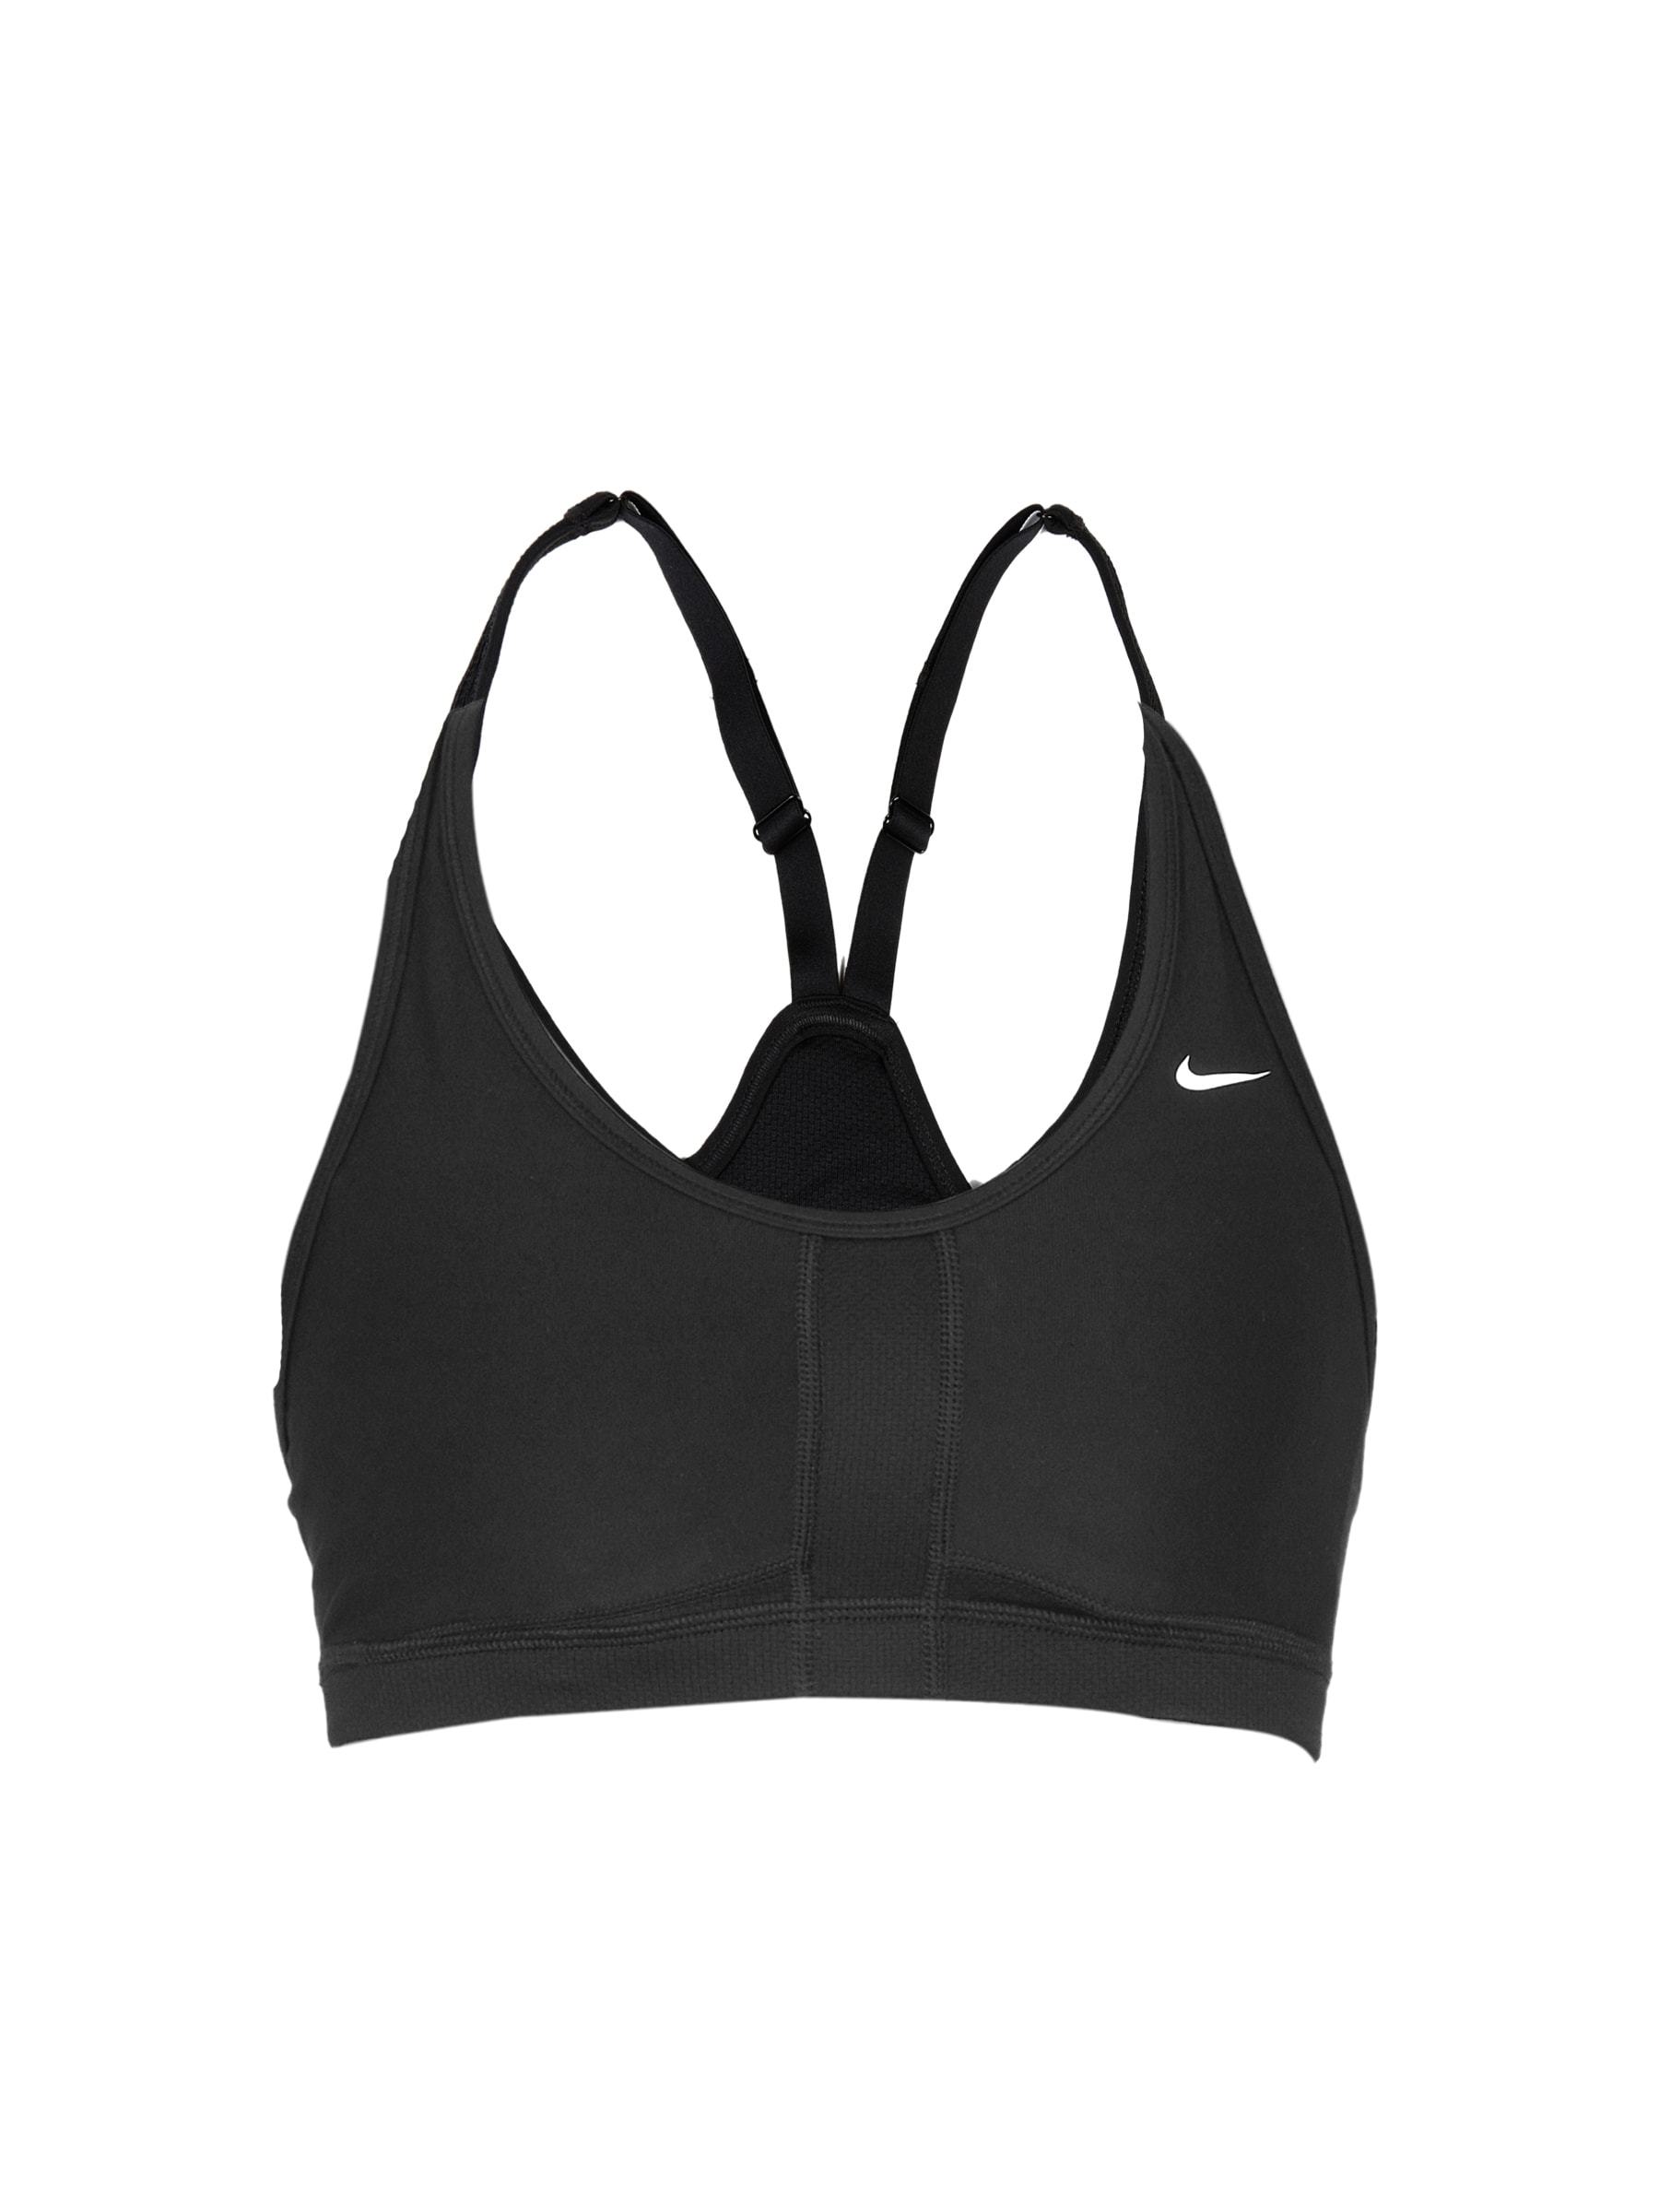 Nike Women Training sports bra Black Tops